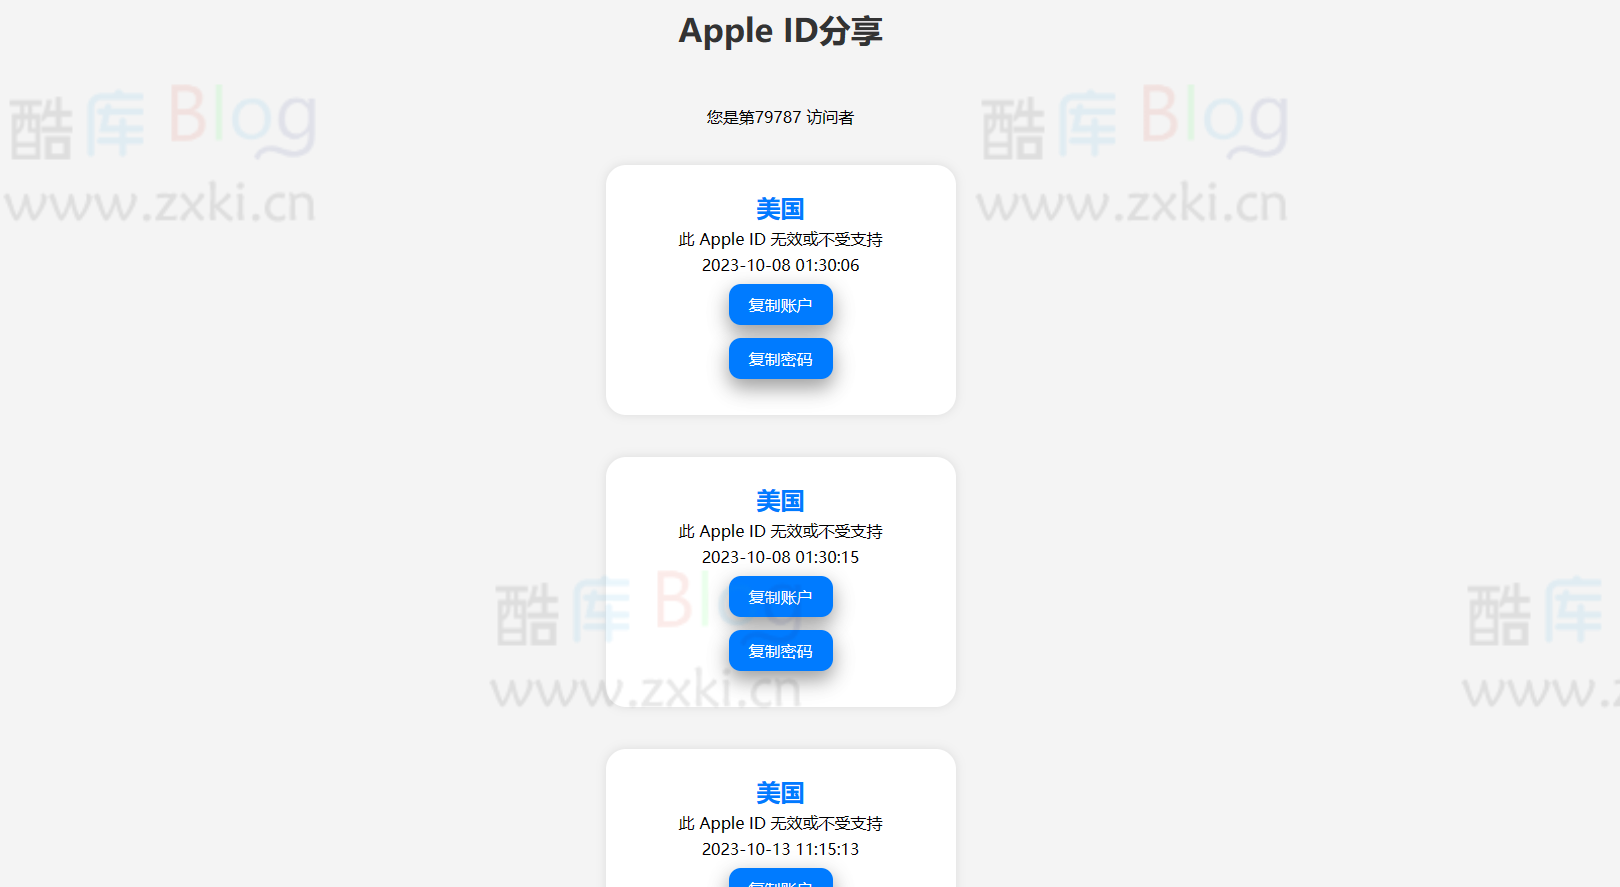 iosshop-免费外区美区共享Apple ID分享网站 第2张插图